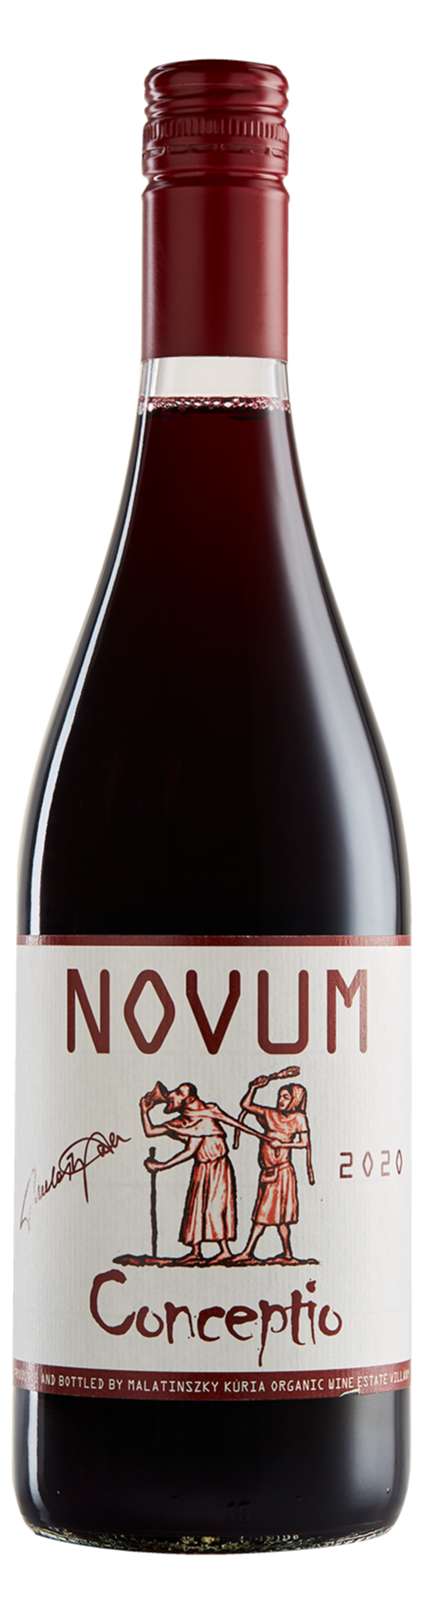 Novum, Bor - Malatinszky Kúria Organic Wine Estate